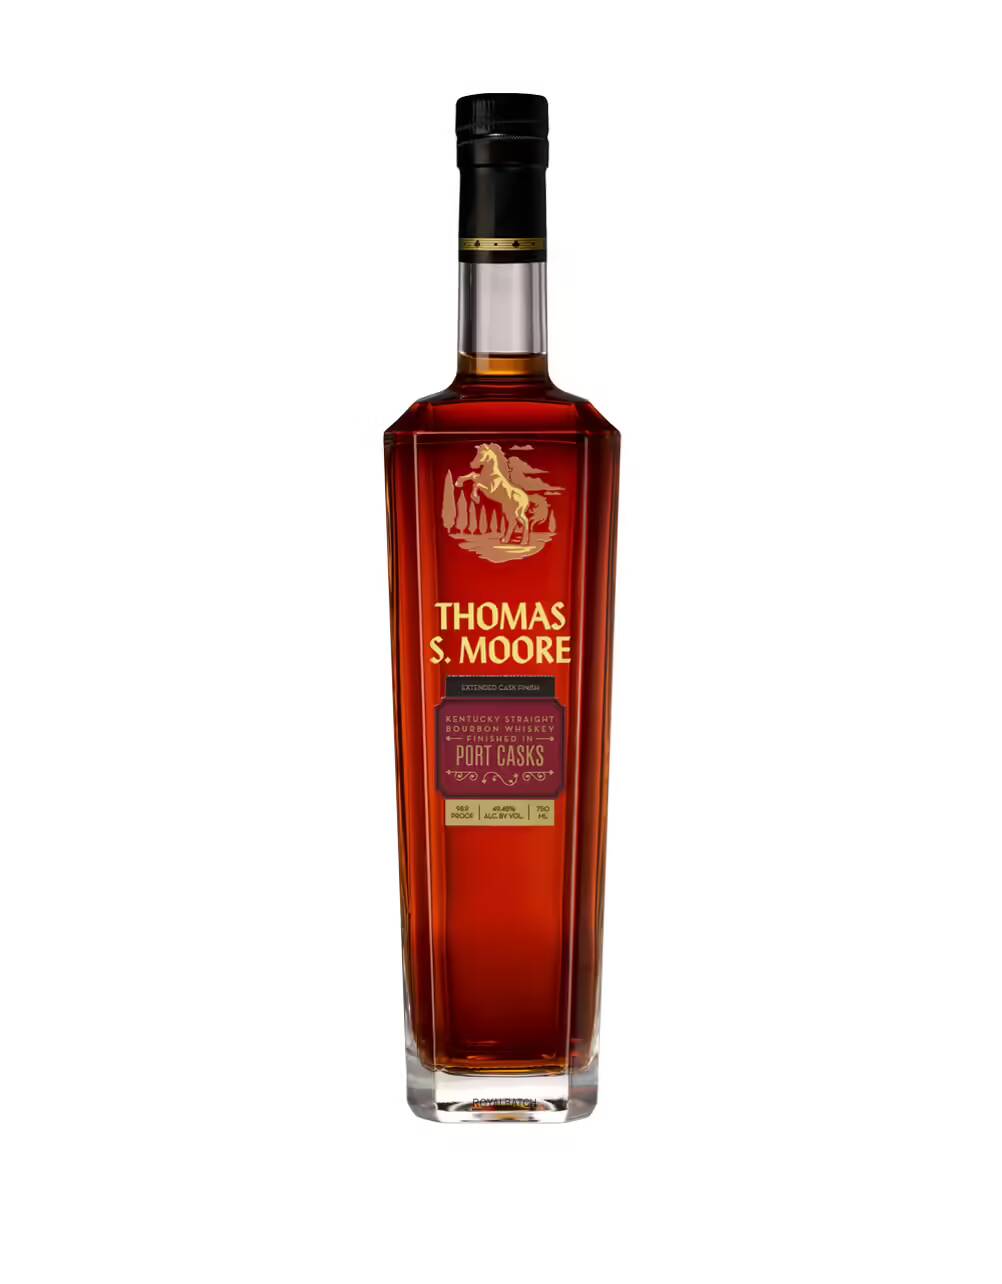 Thomas S. Moore Port Casks Bourbon Whiskey